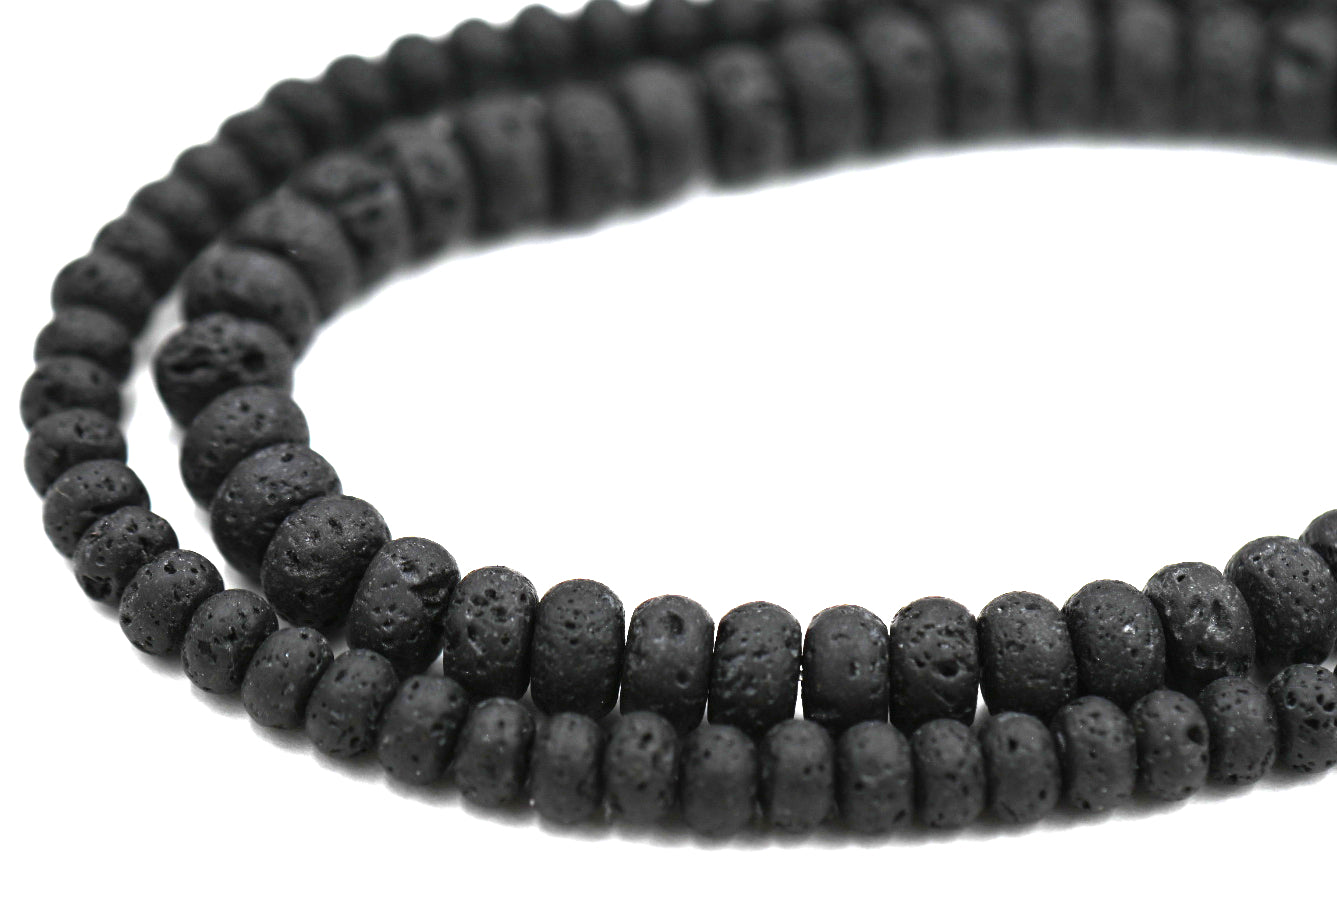 Black Lava Rock Rondelle 8x5mm, 6x4mm Natural Lava Stone Beads, 15-16 inch strand